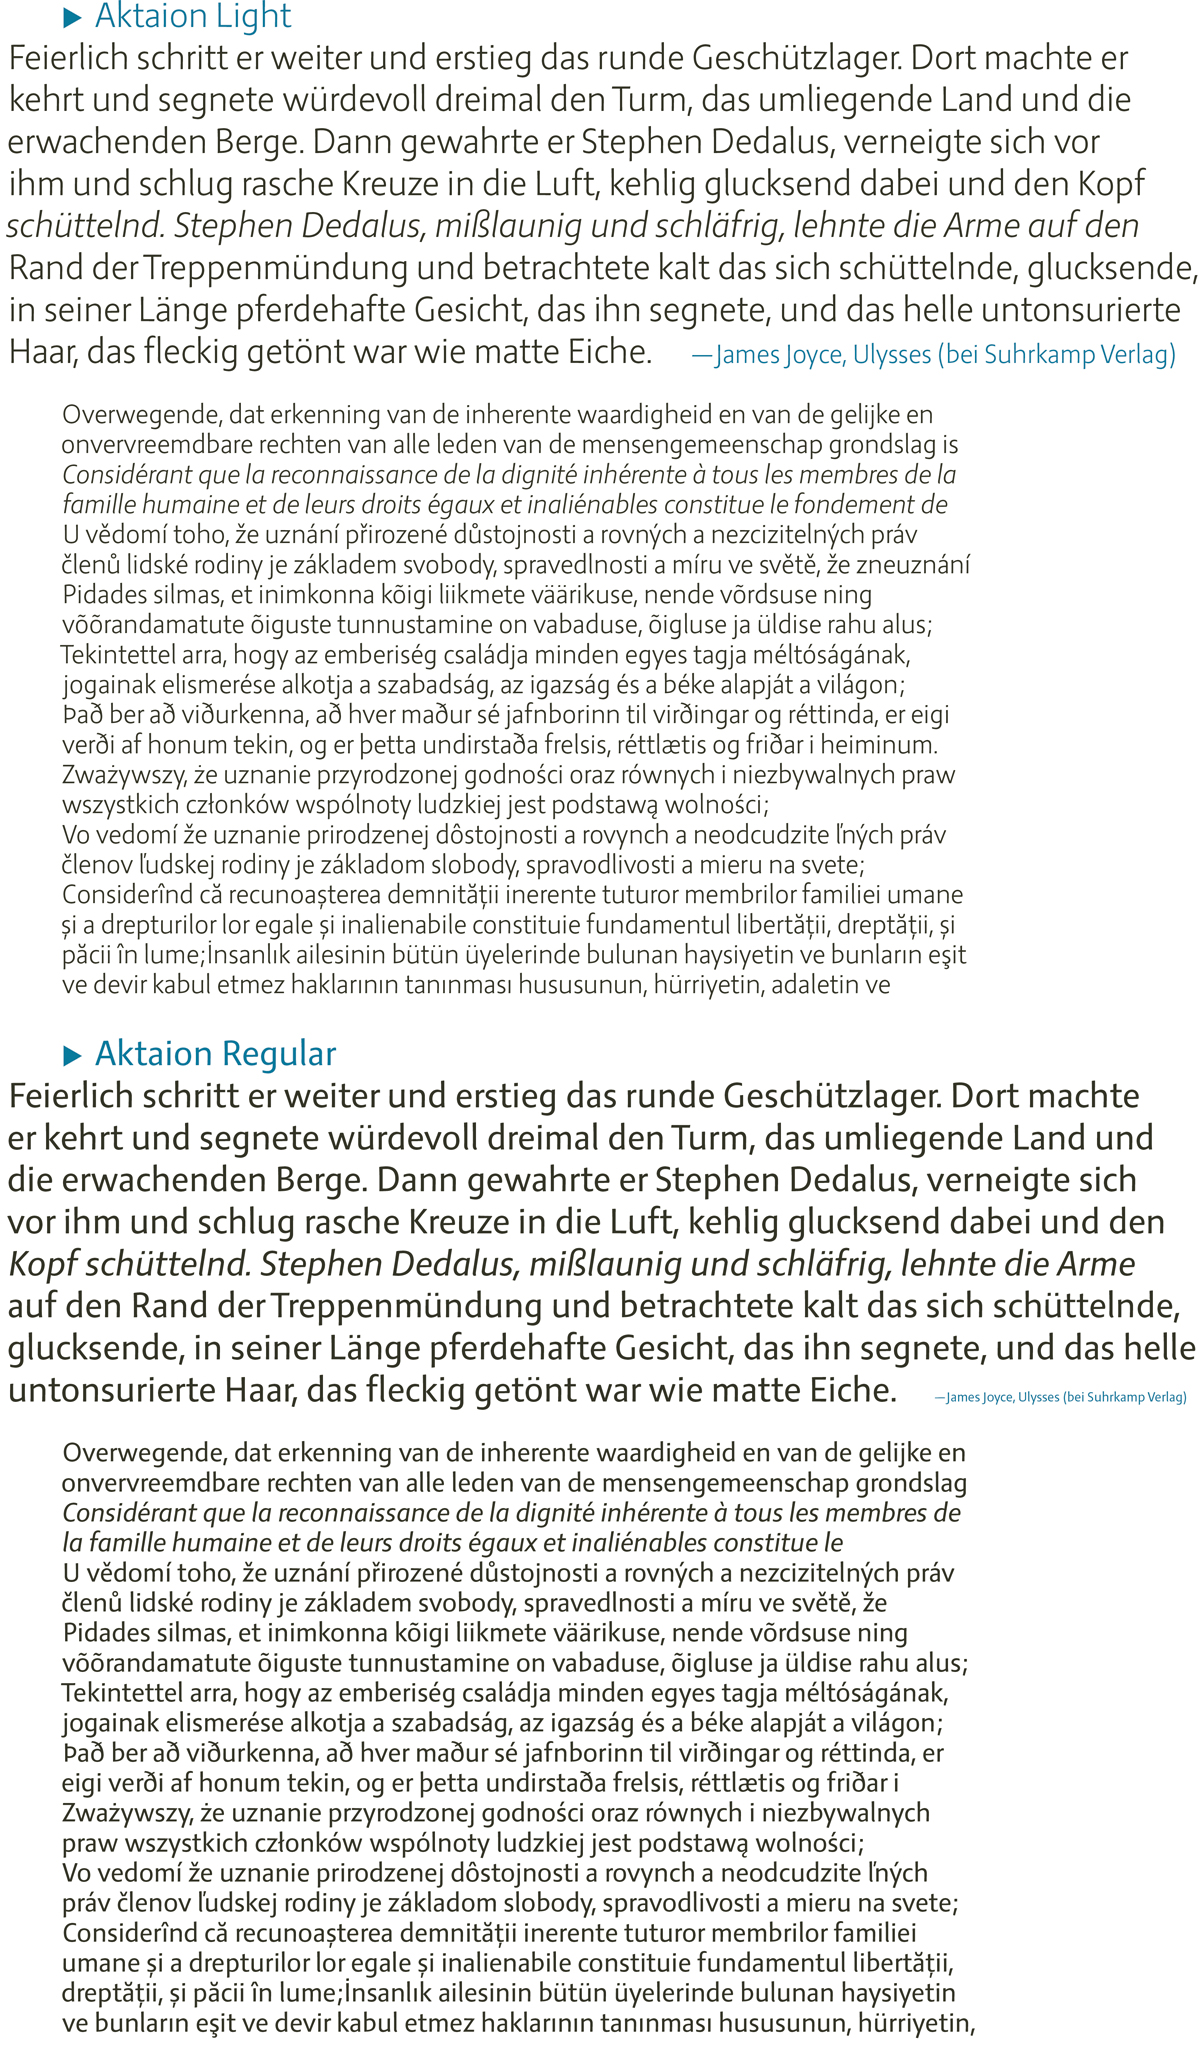 Aktaion fonts by Jürgen Weltin type matters text samples specimen